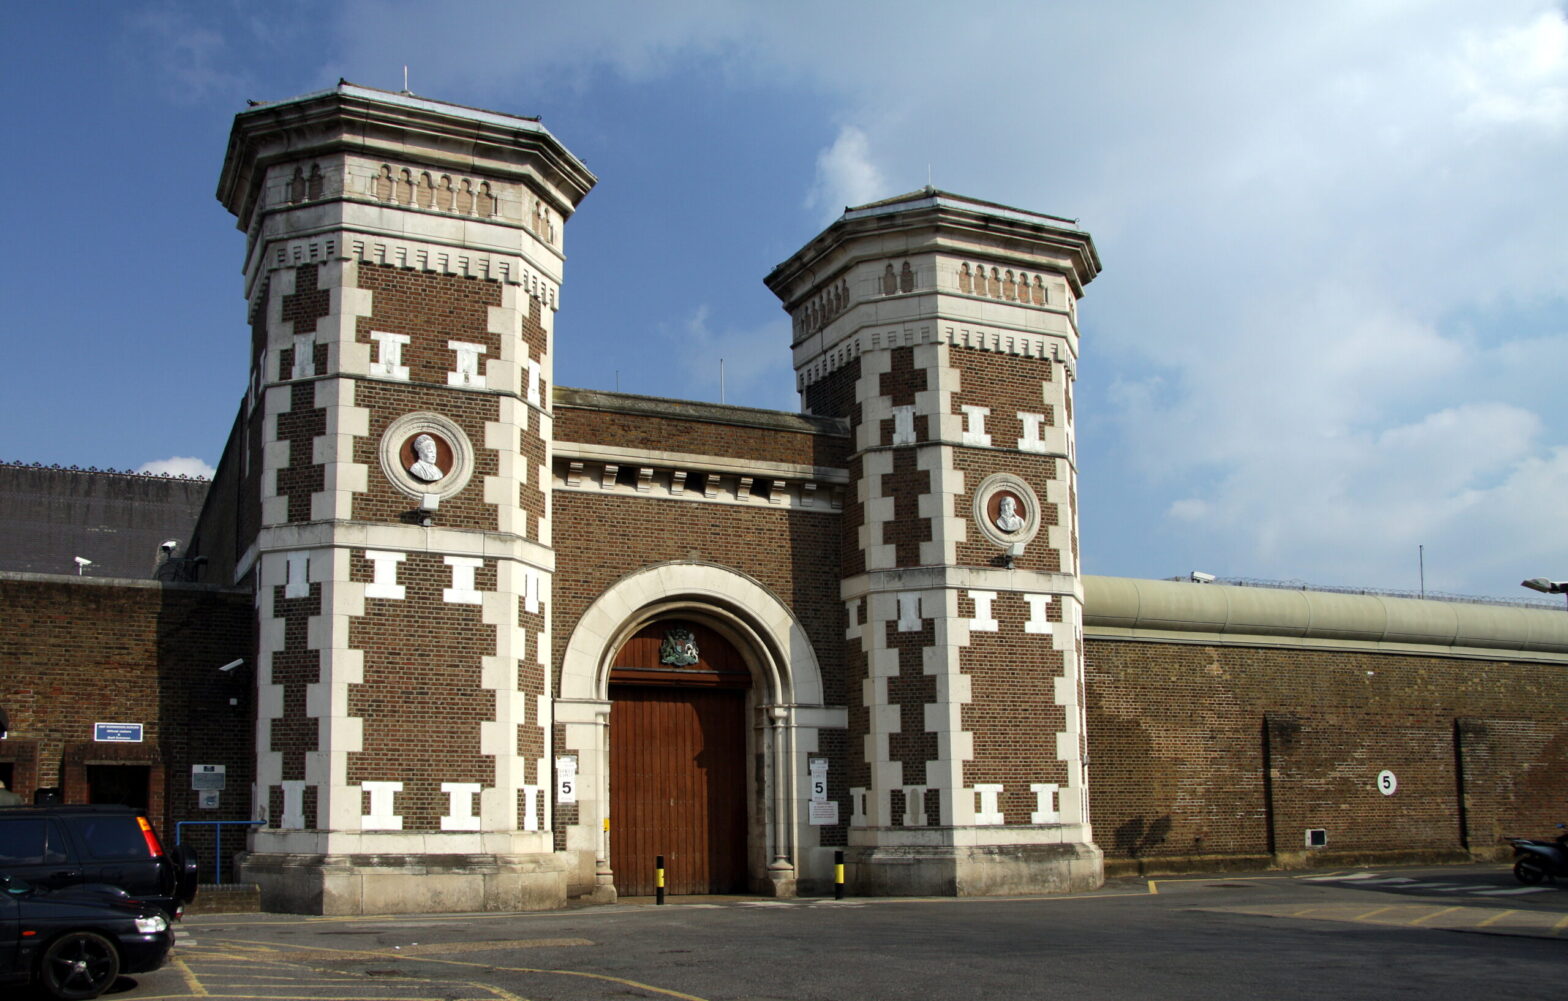 image of prison gates